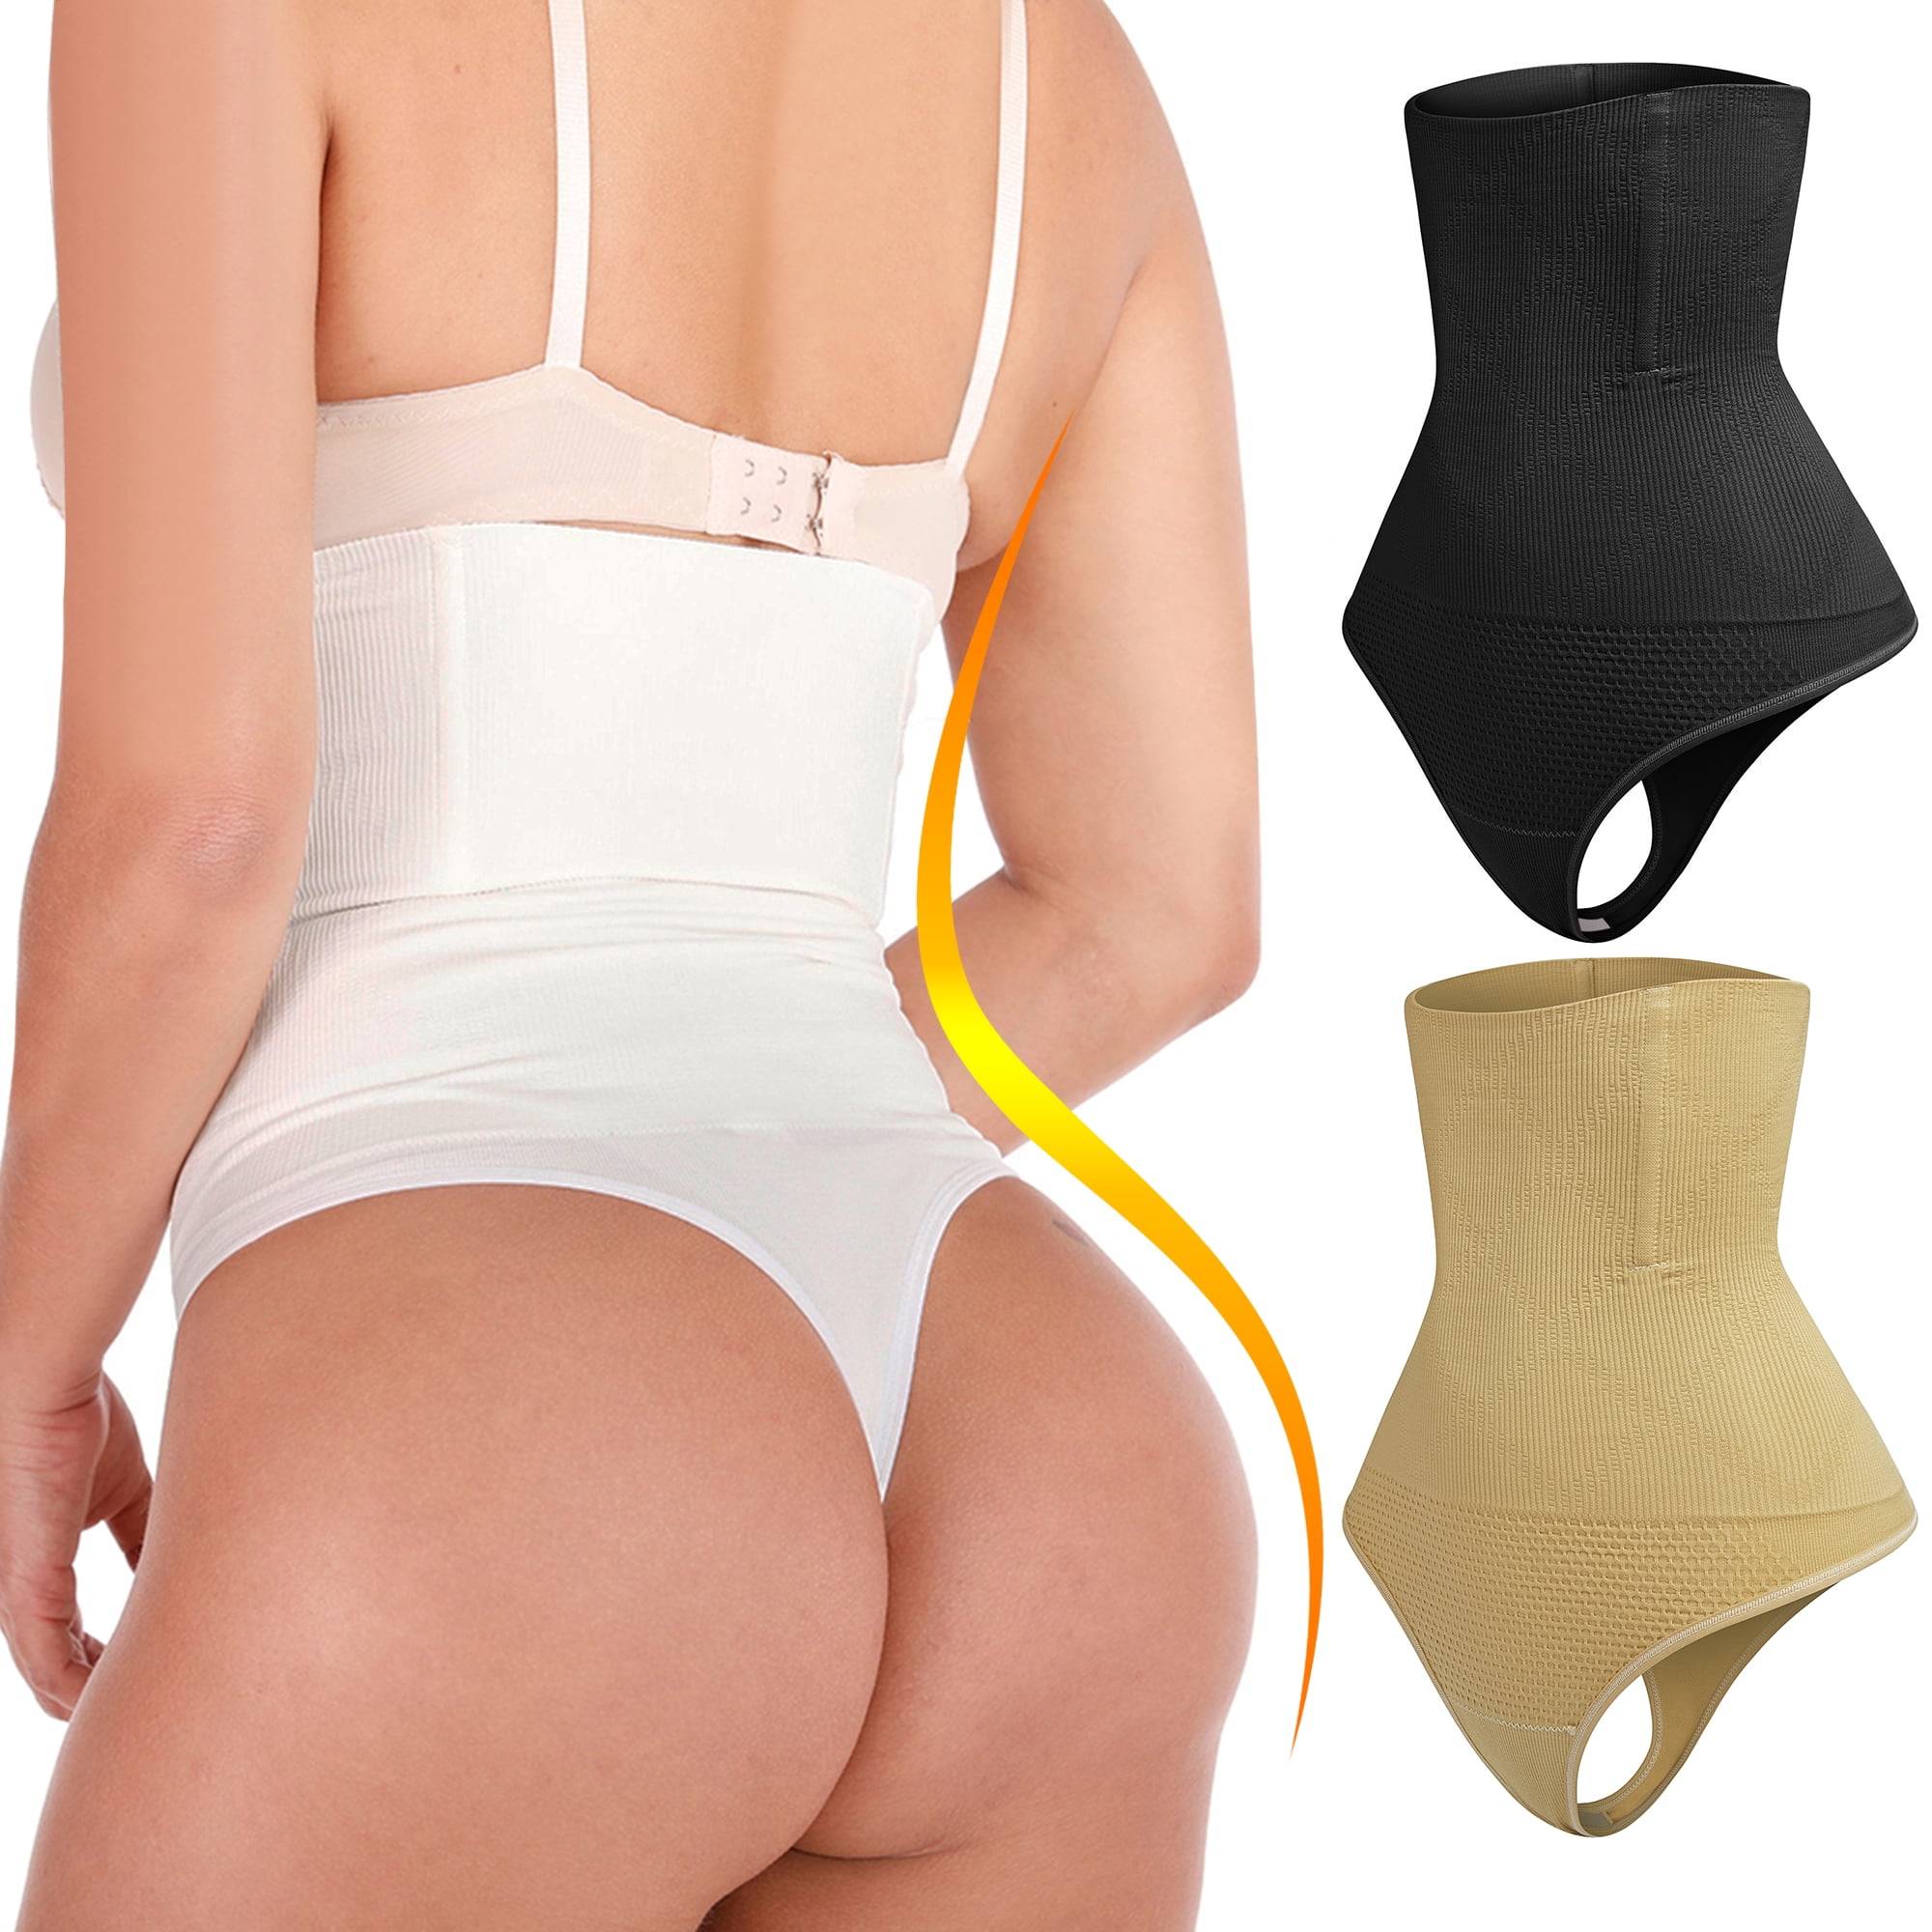 Spencer Women's Thong Shapewear High Waist Cincher Body Shaper Tummy Control  Panties Slimming Briefs M/L,Black 